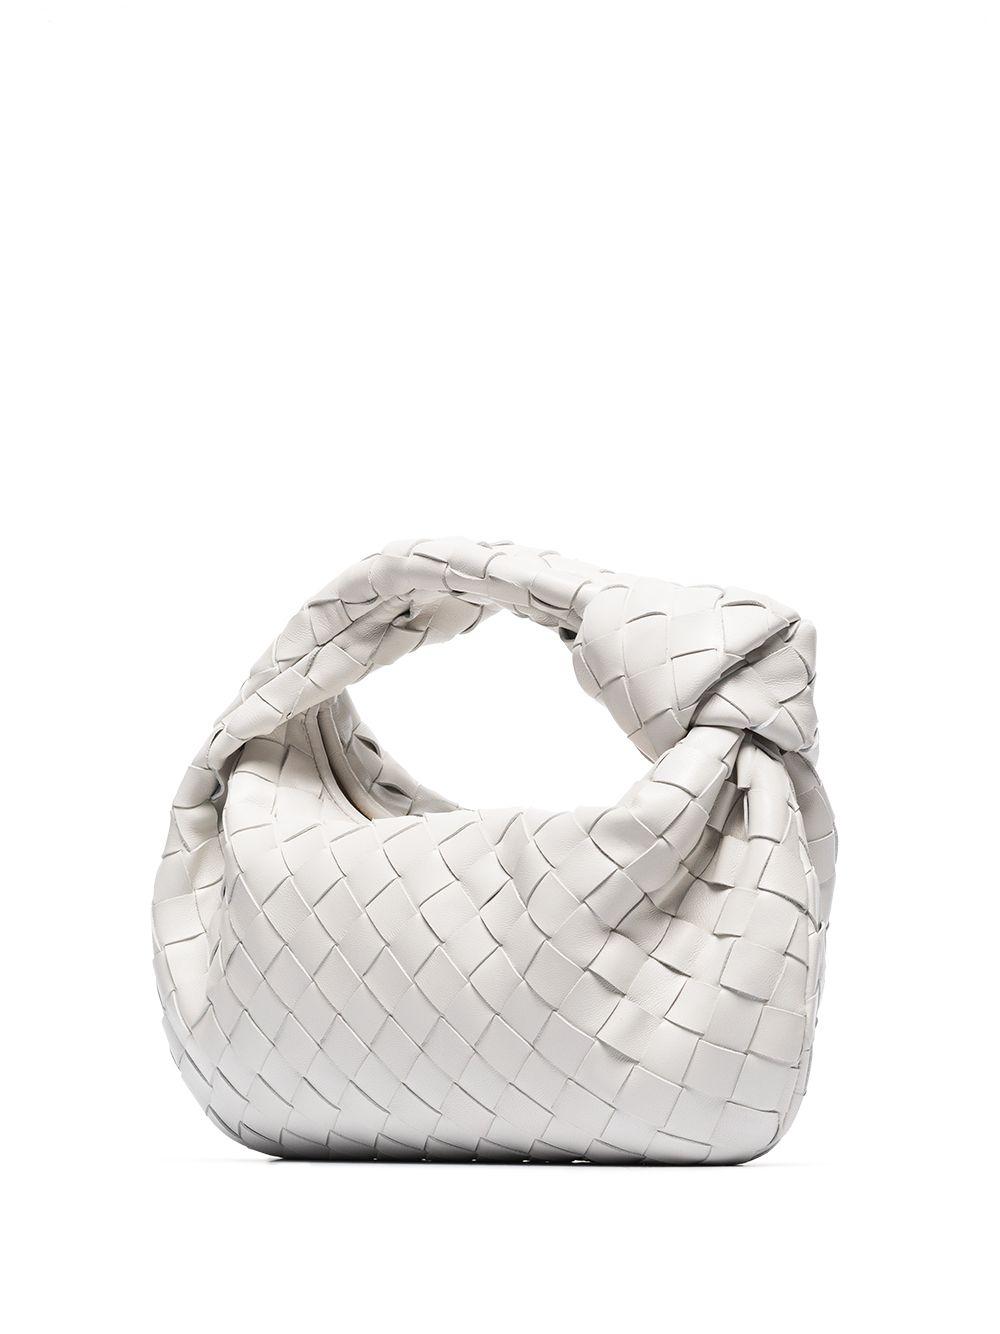 Bottega Veneta Jodie Leather Mini Bag in White | Lyst